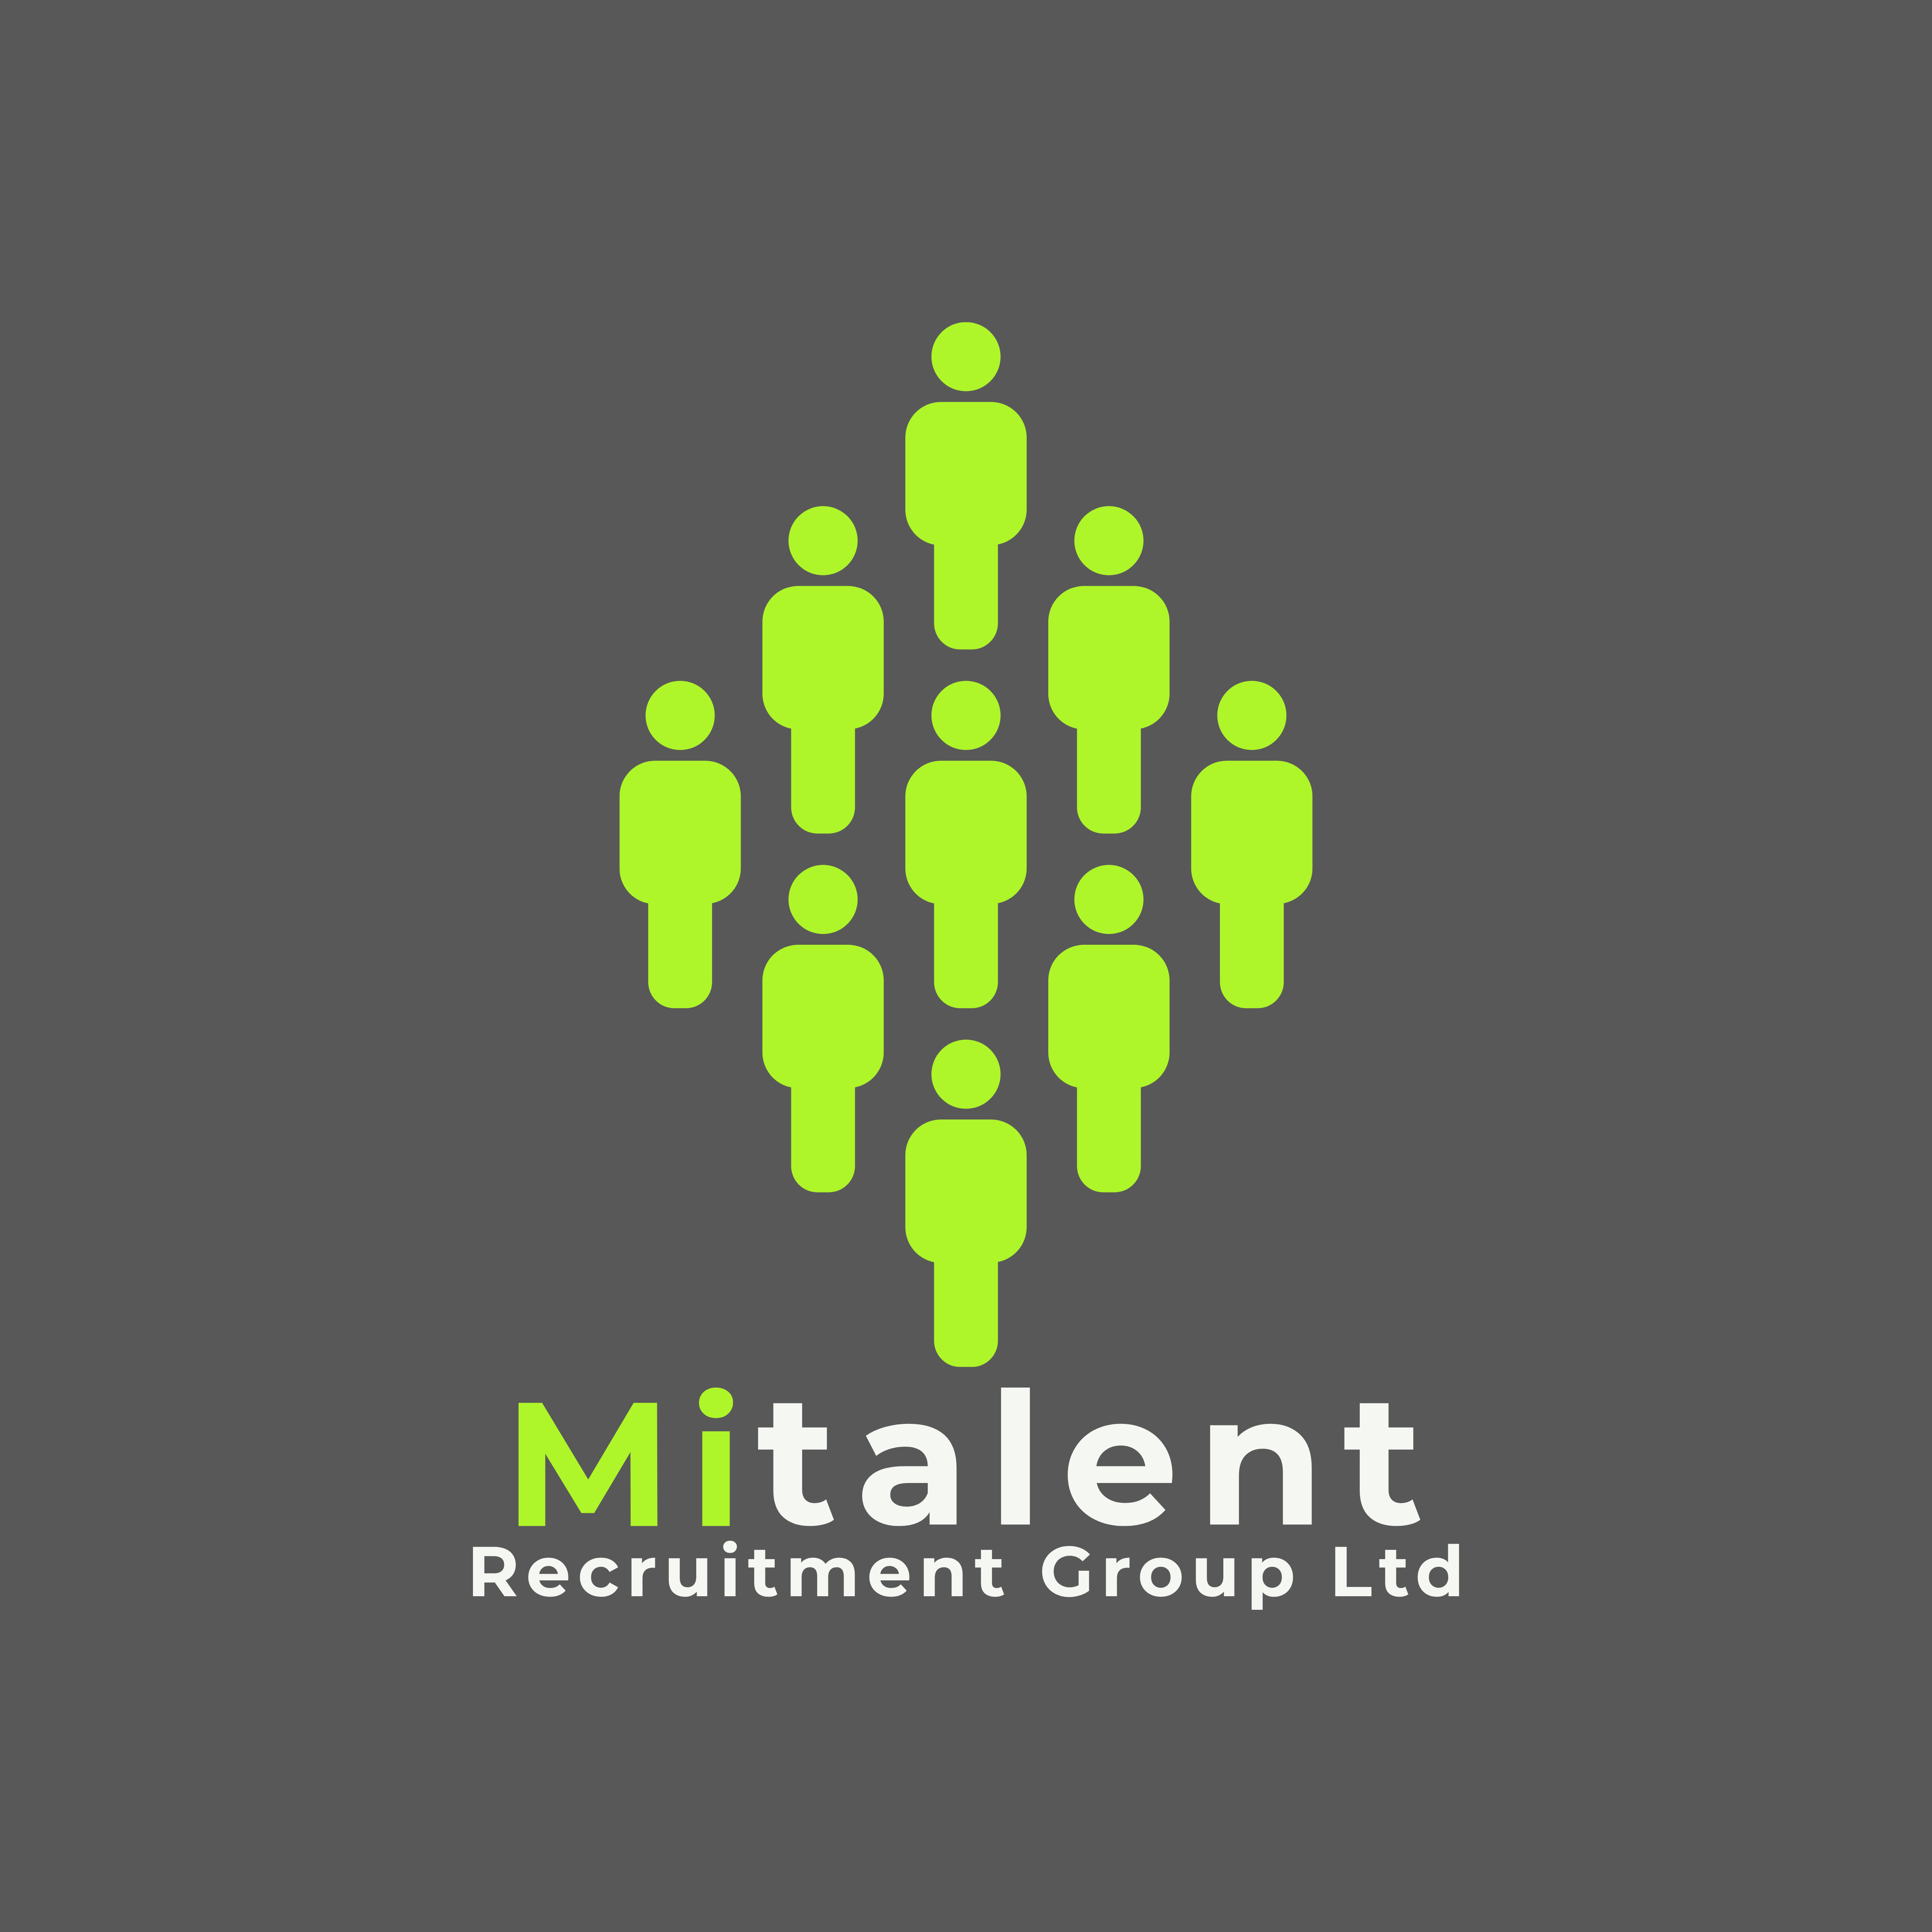 MiTalent Recruitment Group Ltd